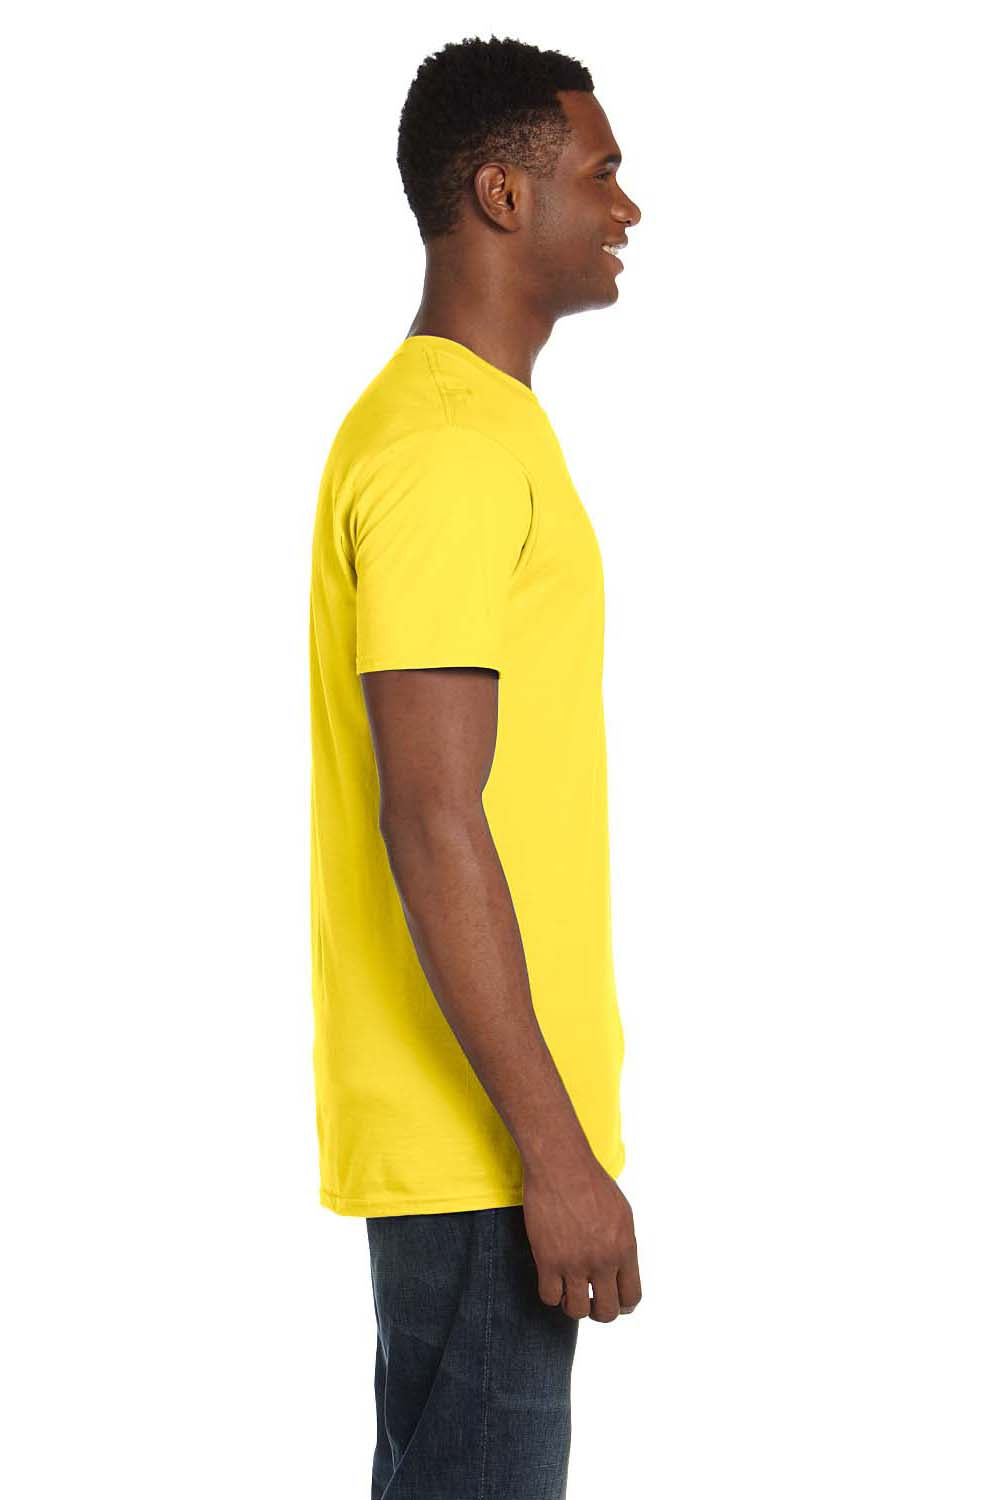 Hanes 4980 Mens Nano-T Short Sleeve Crewneck T-Shirt Yellow Side